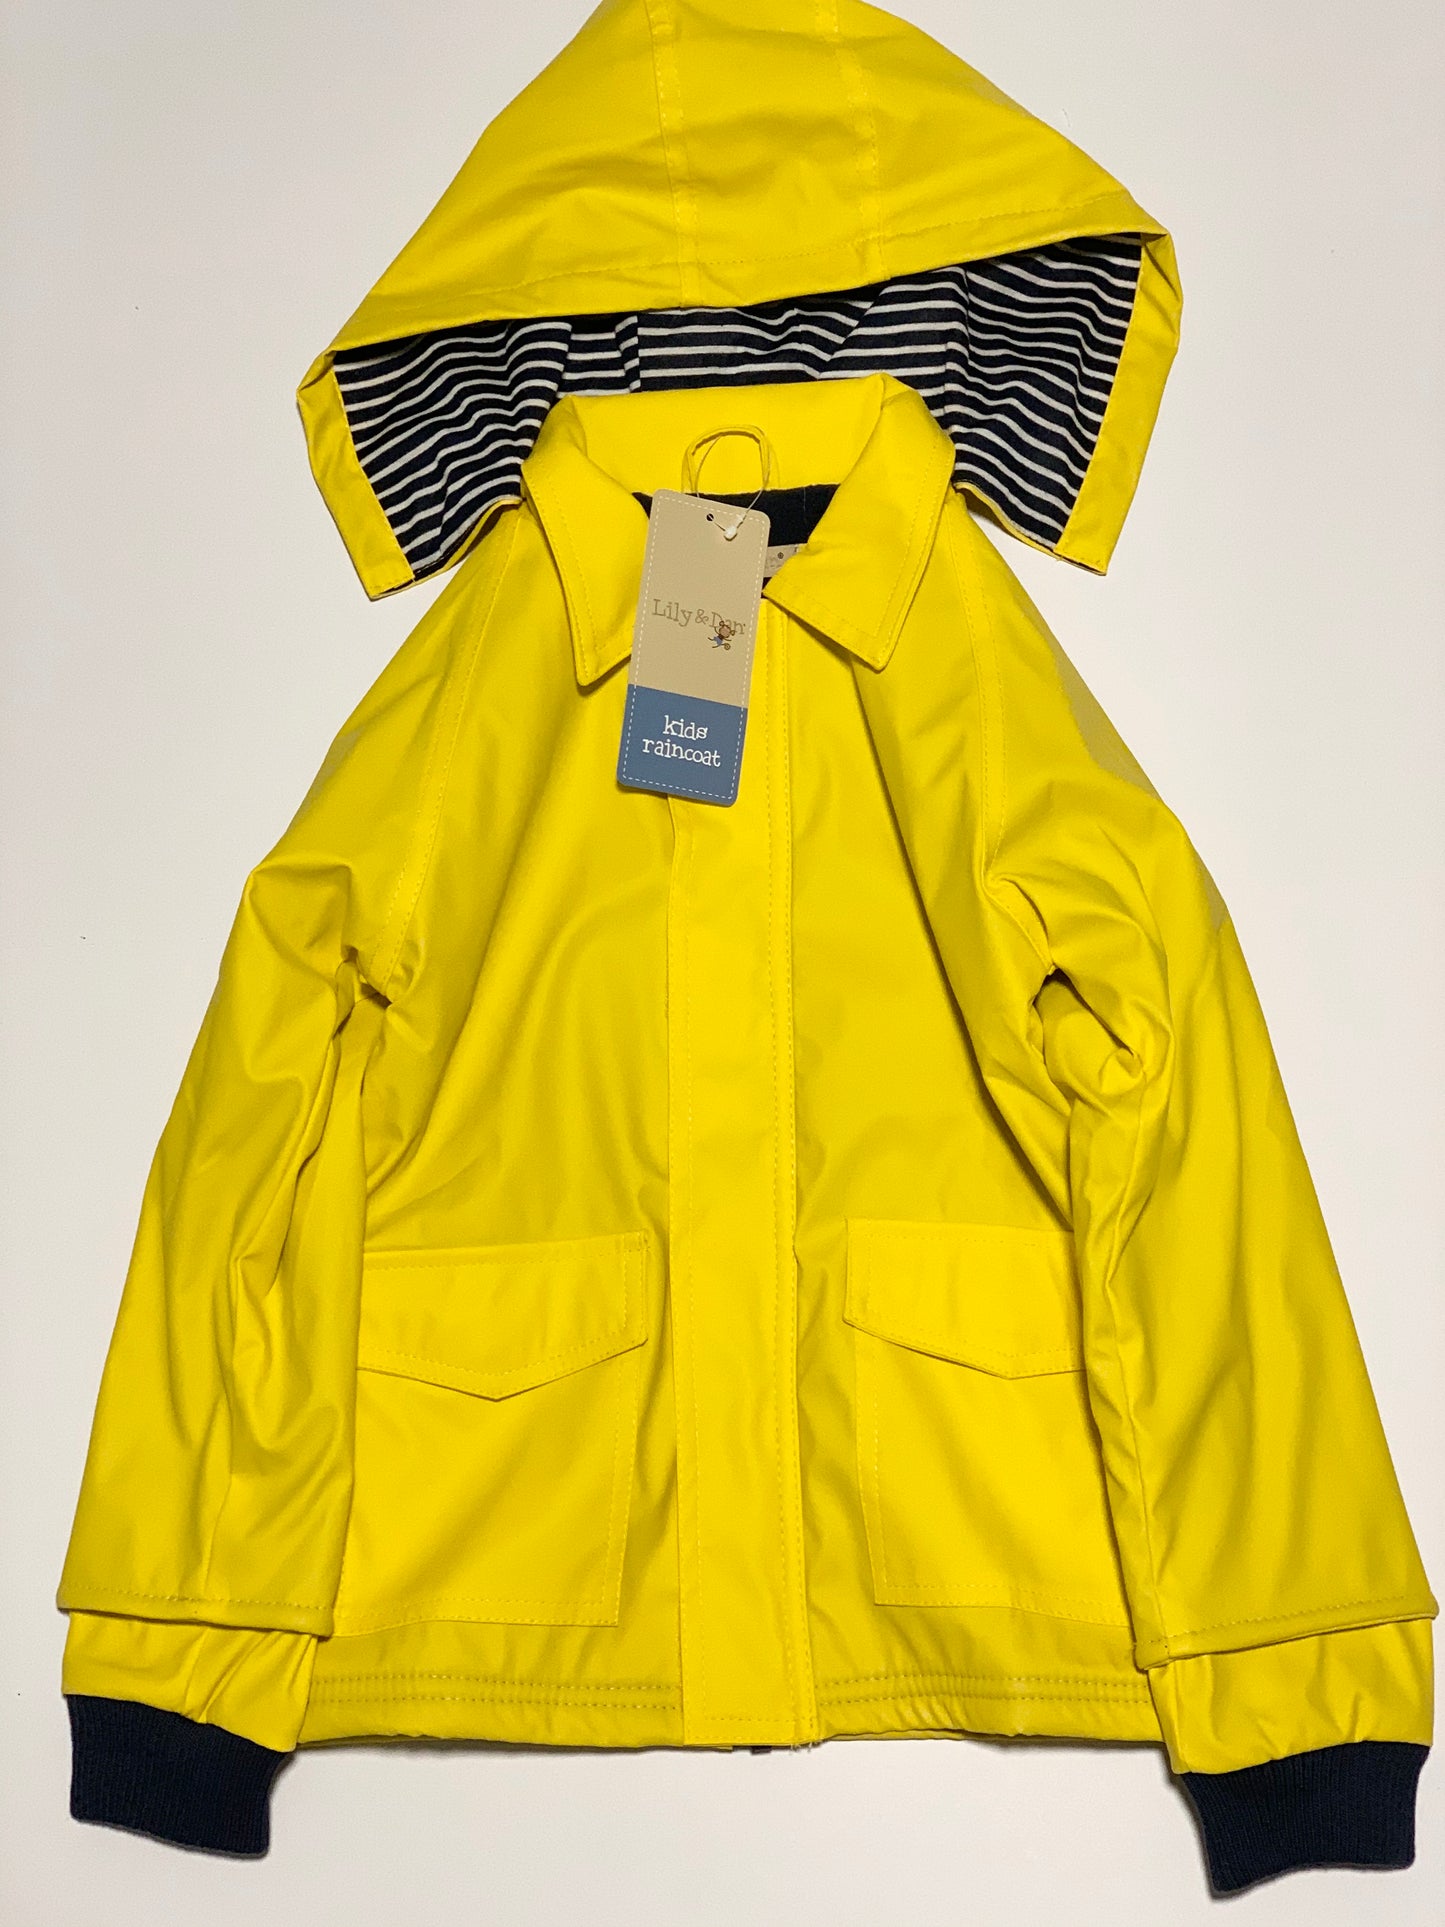 Yellow raincoat BNWT - Size 4